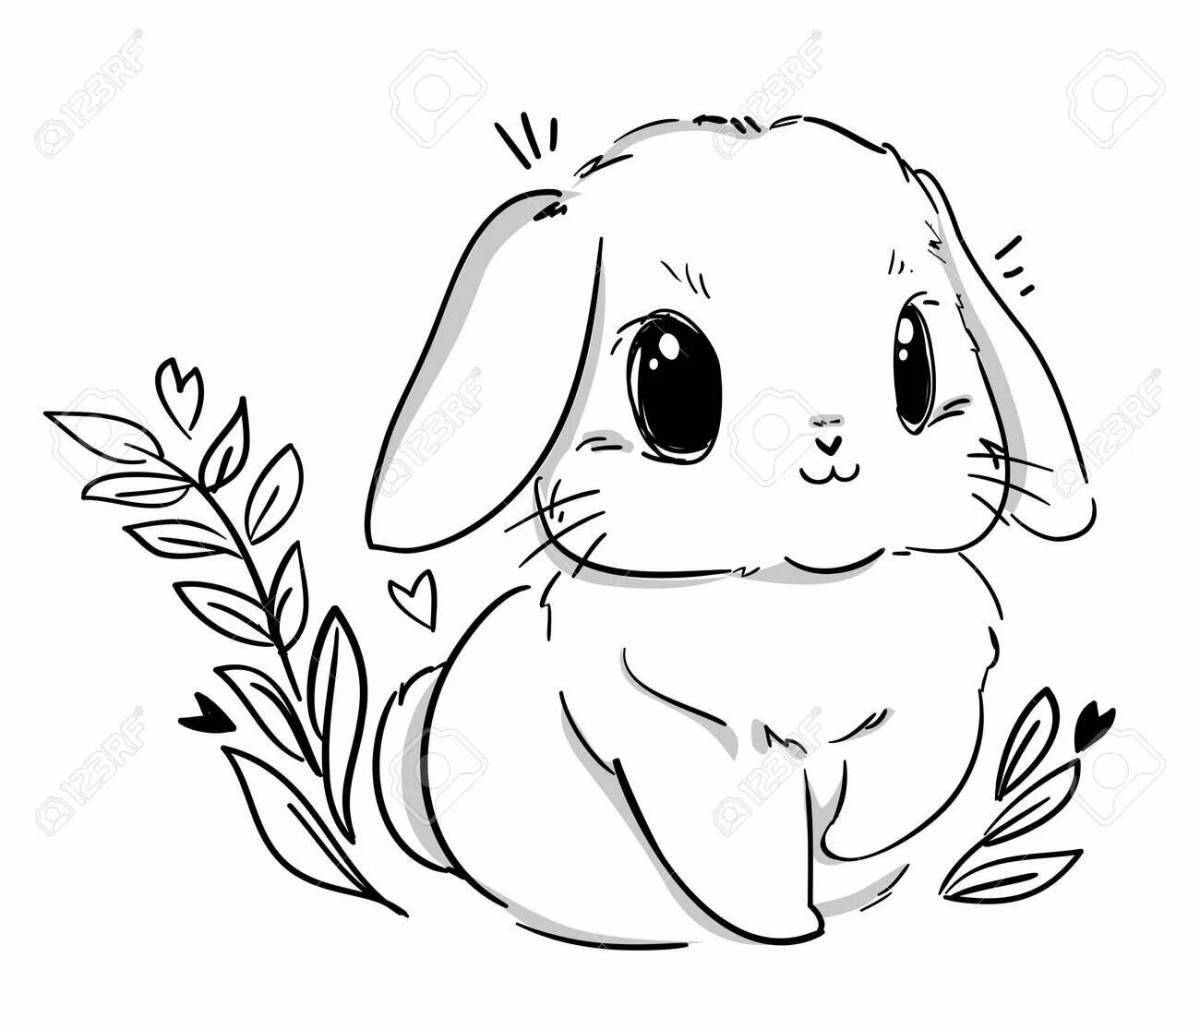 Snuggable rabbit coloring page